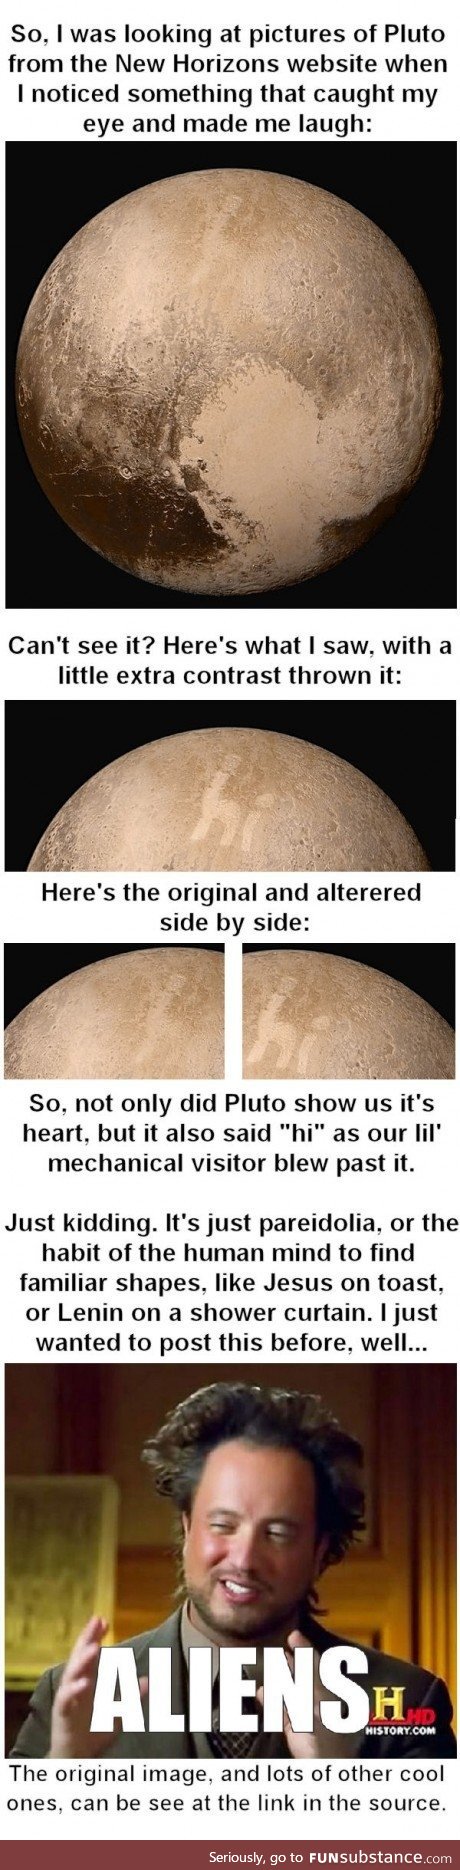 Pluto says hi!